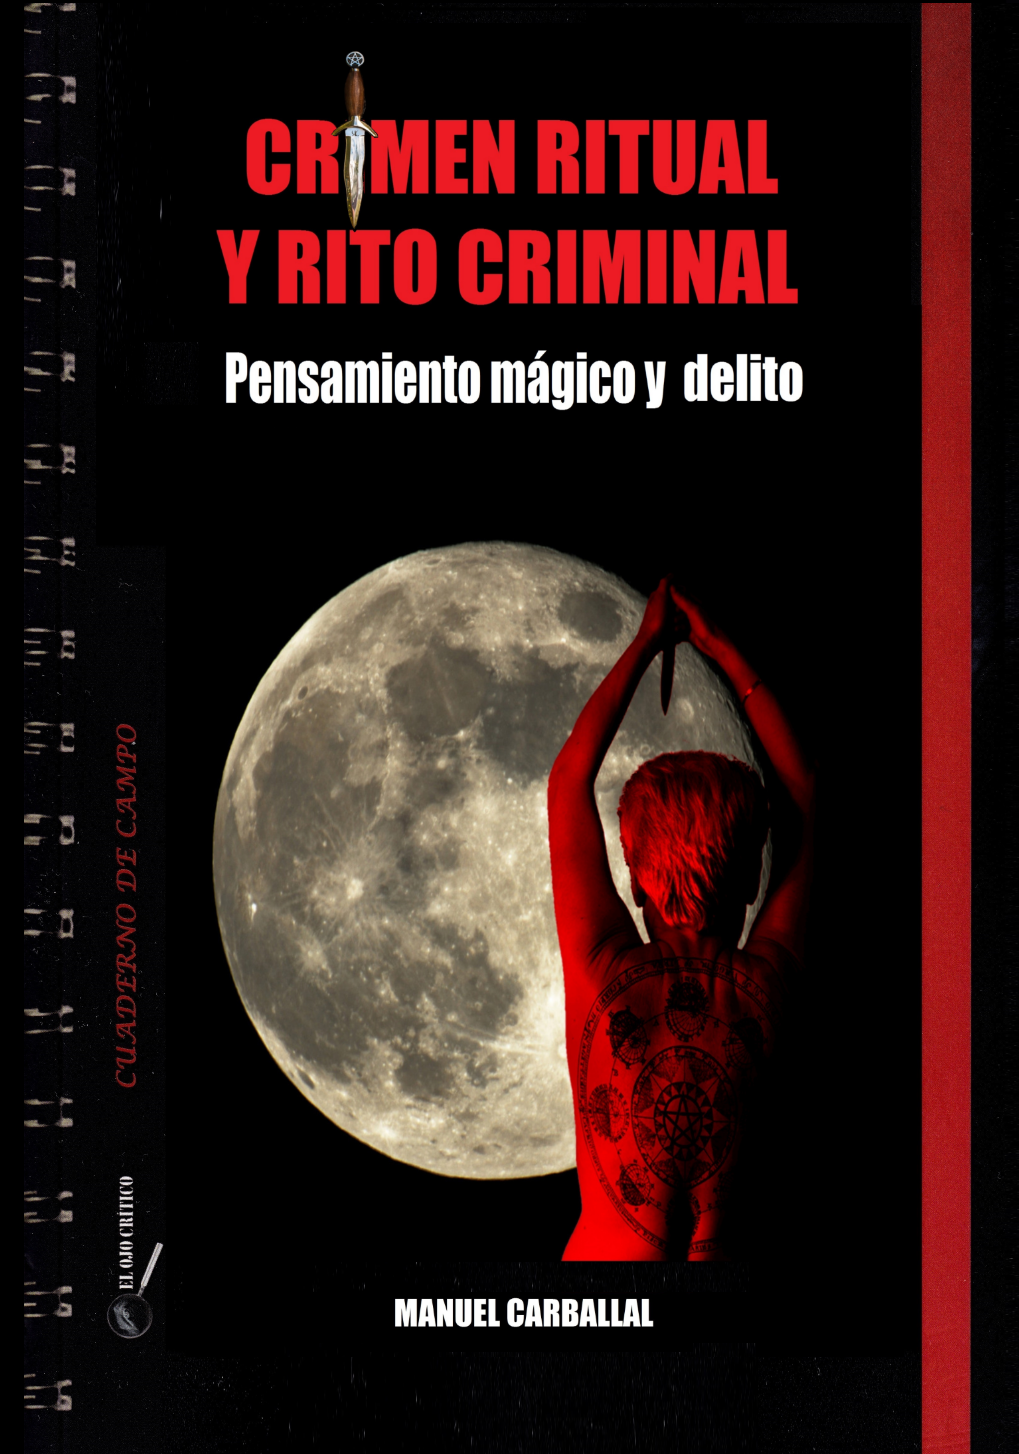 CdC nº 4 "CRIMEN RITUAL Y RITO CRIMINAL"